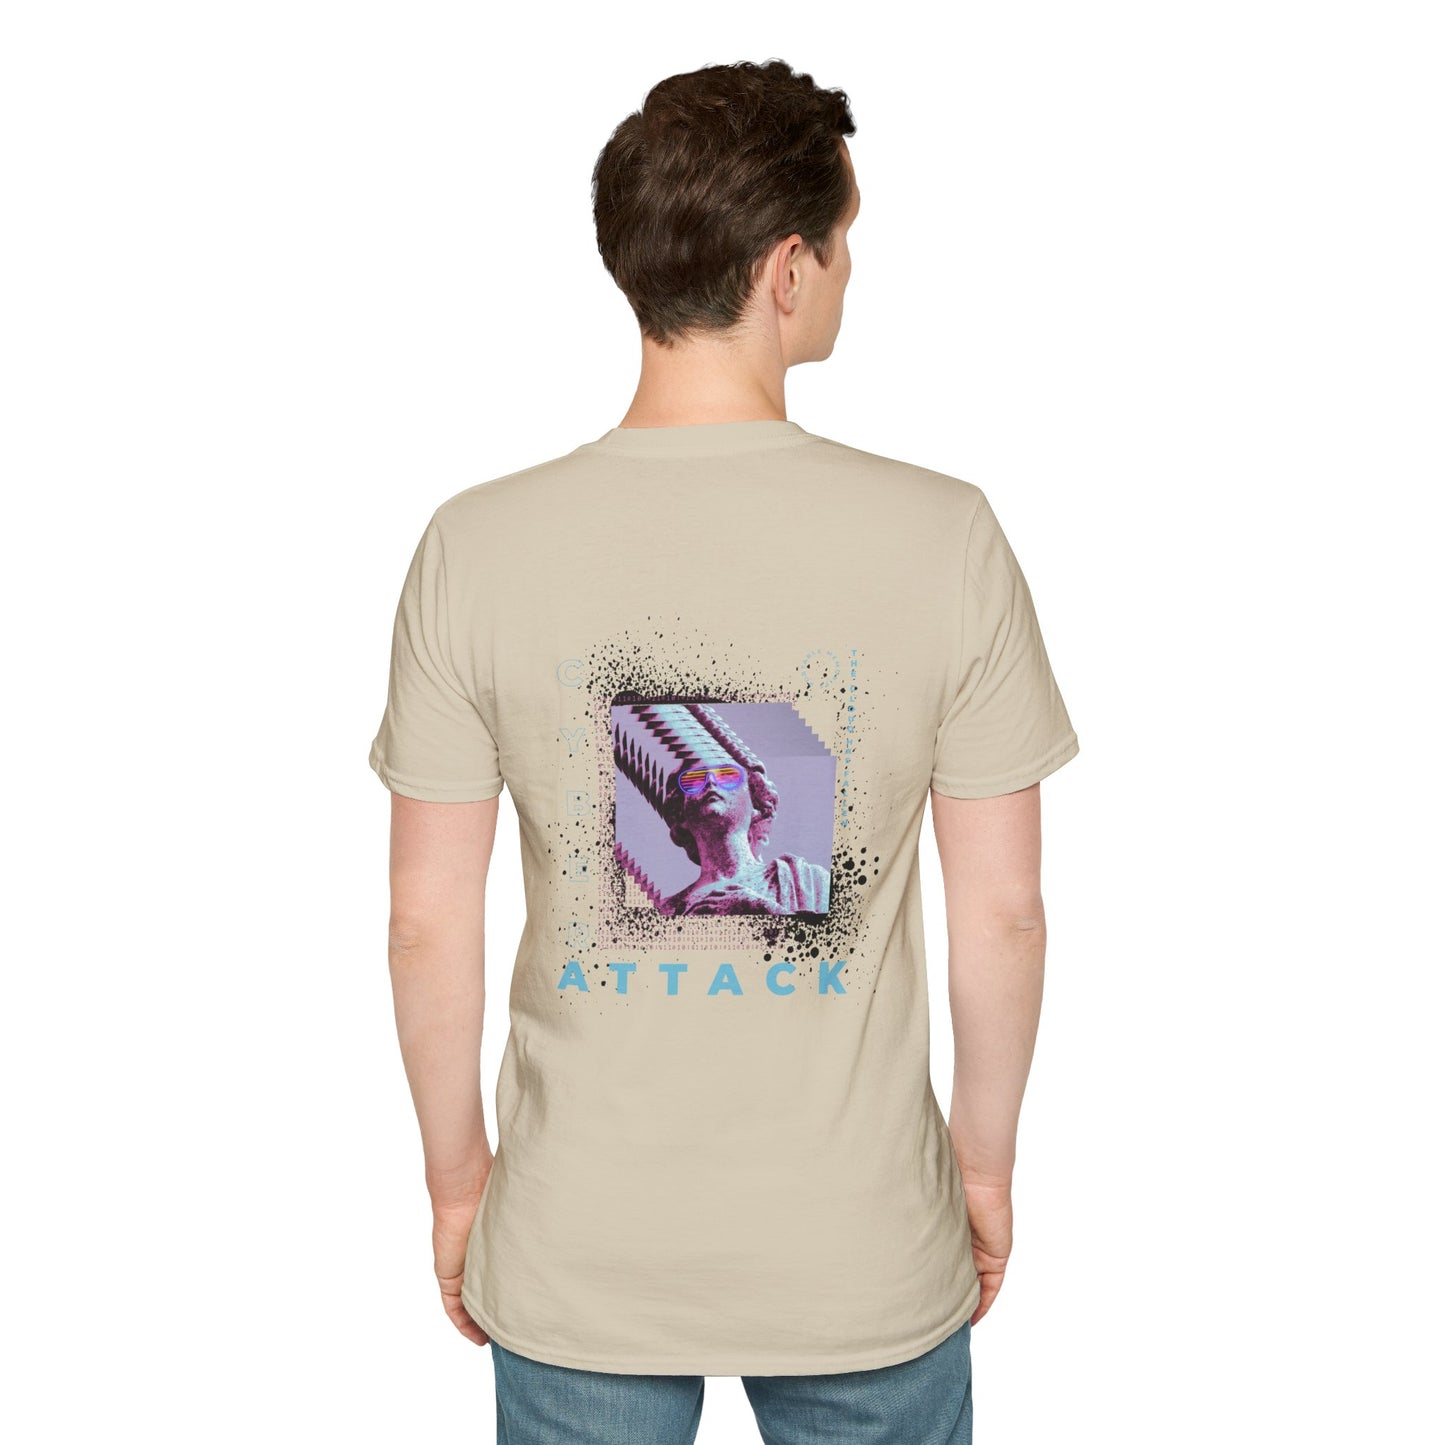 Ecru T-shirt with a pixelated Statue of Liberty and modern glitch art design